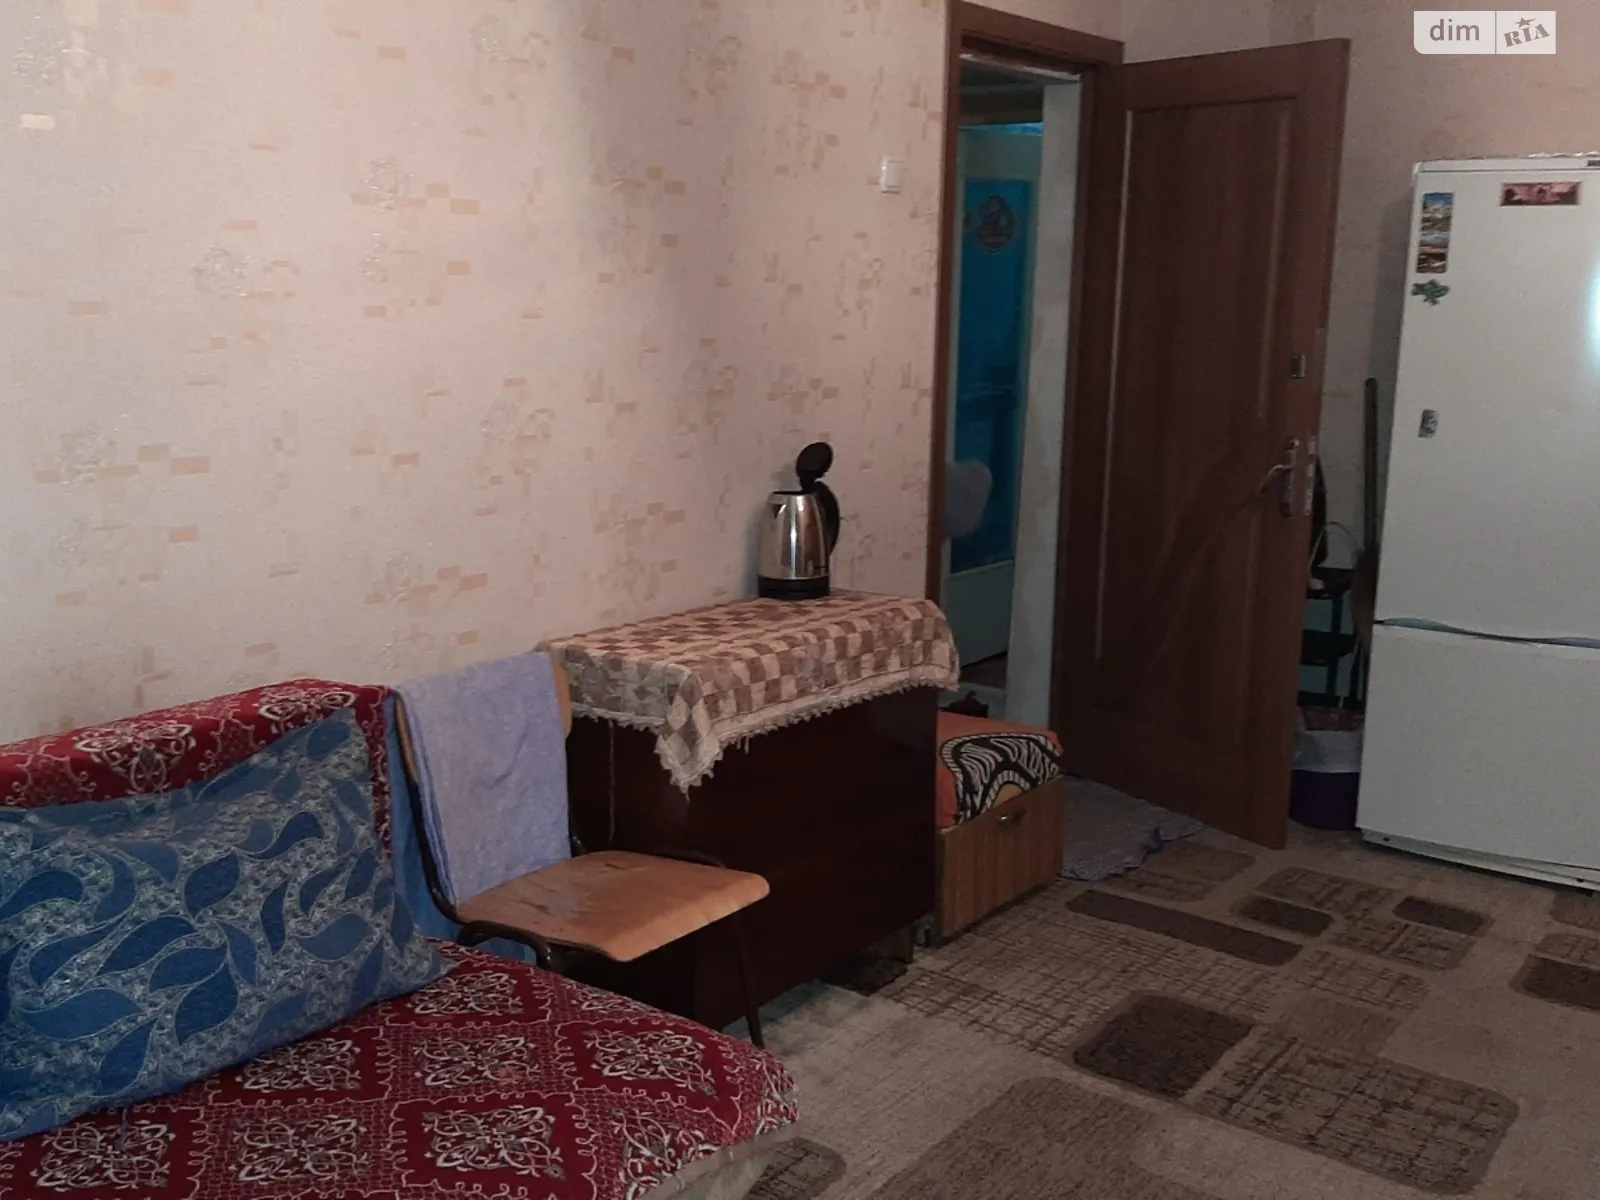 Сдается в аренду комната 30 кв. м в Харькове - фото 2